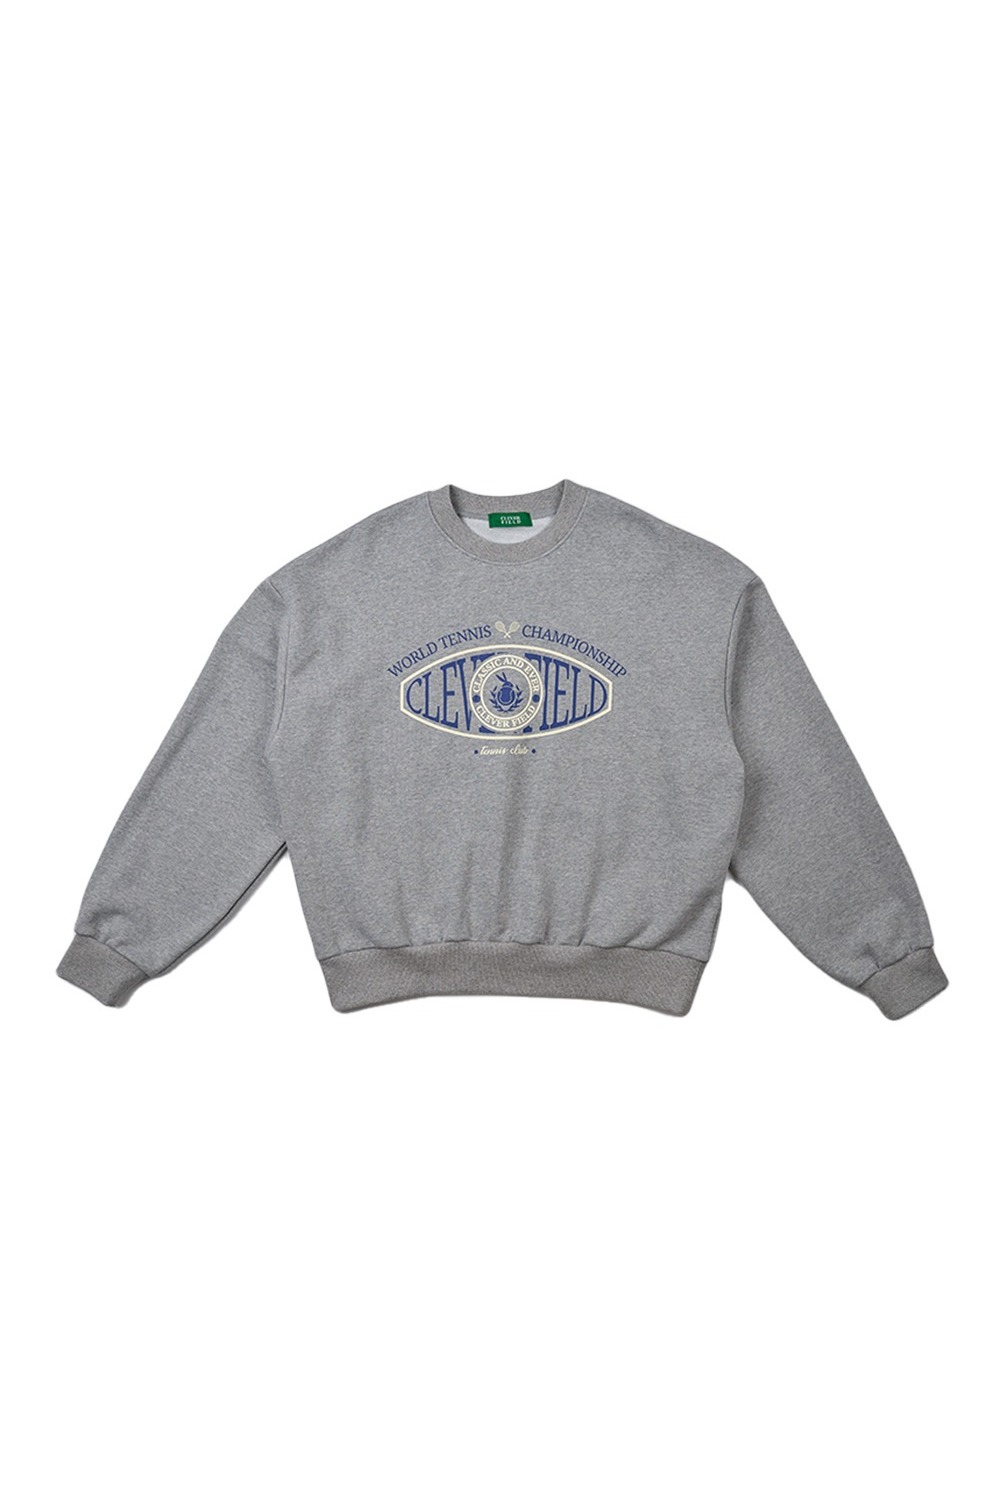 Overfit Signature Emblem Sweatshirt (Melan Grey) RICHEZ